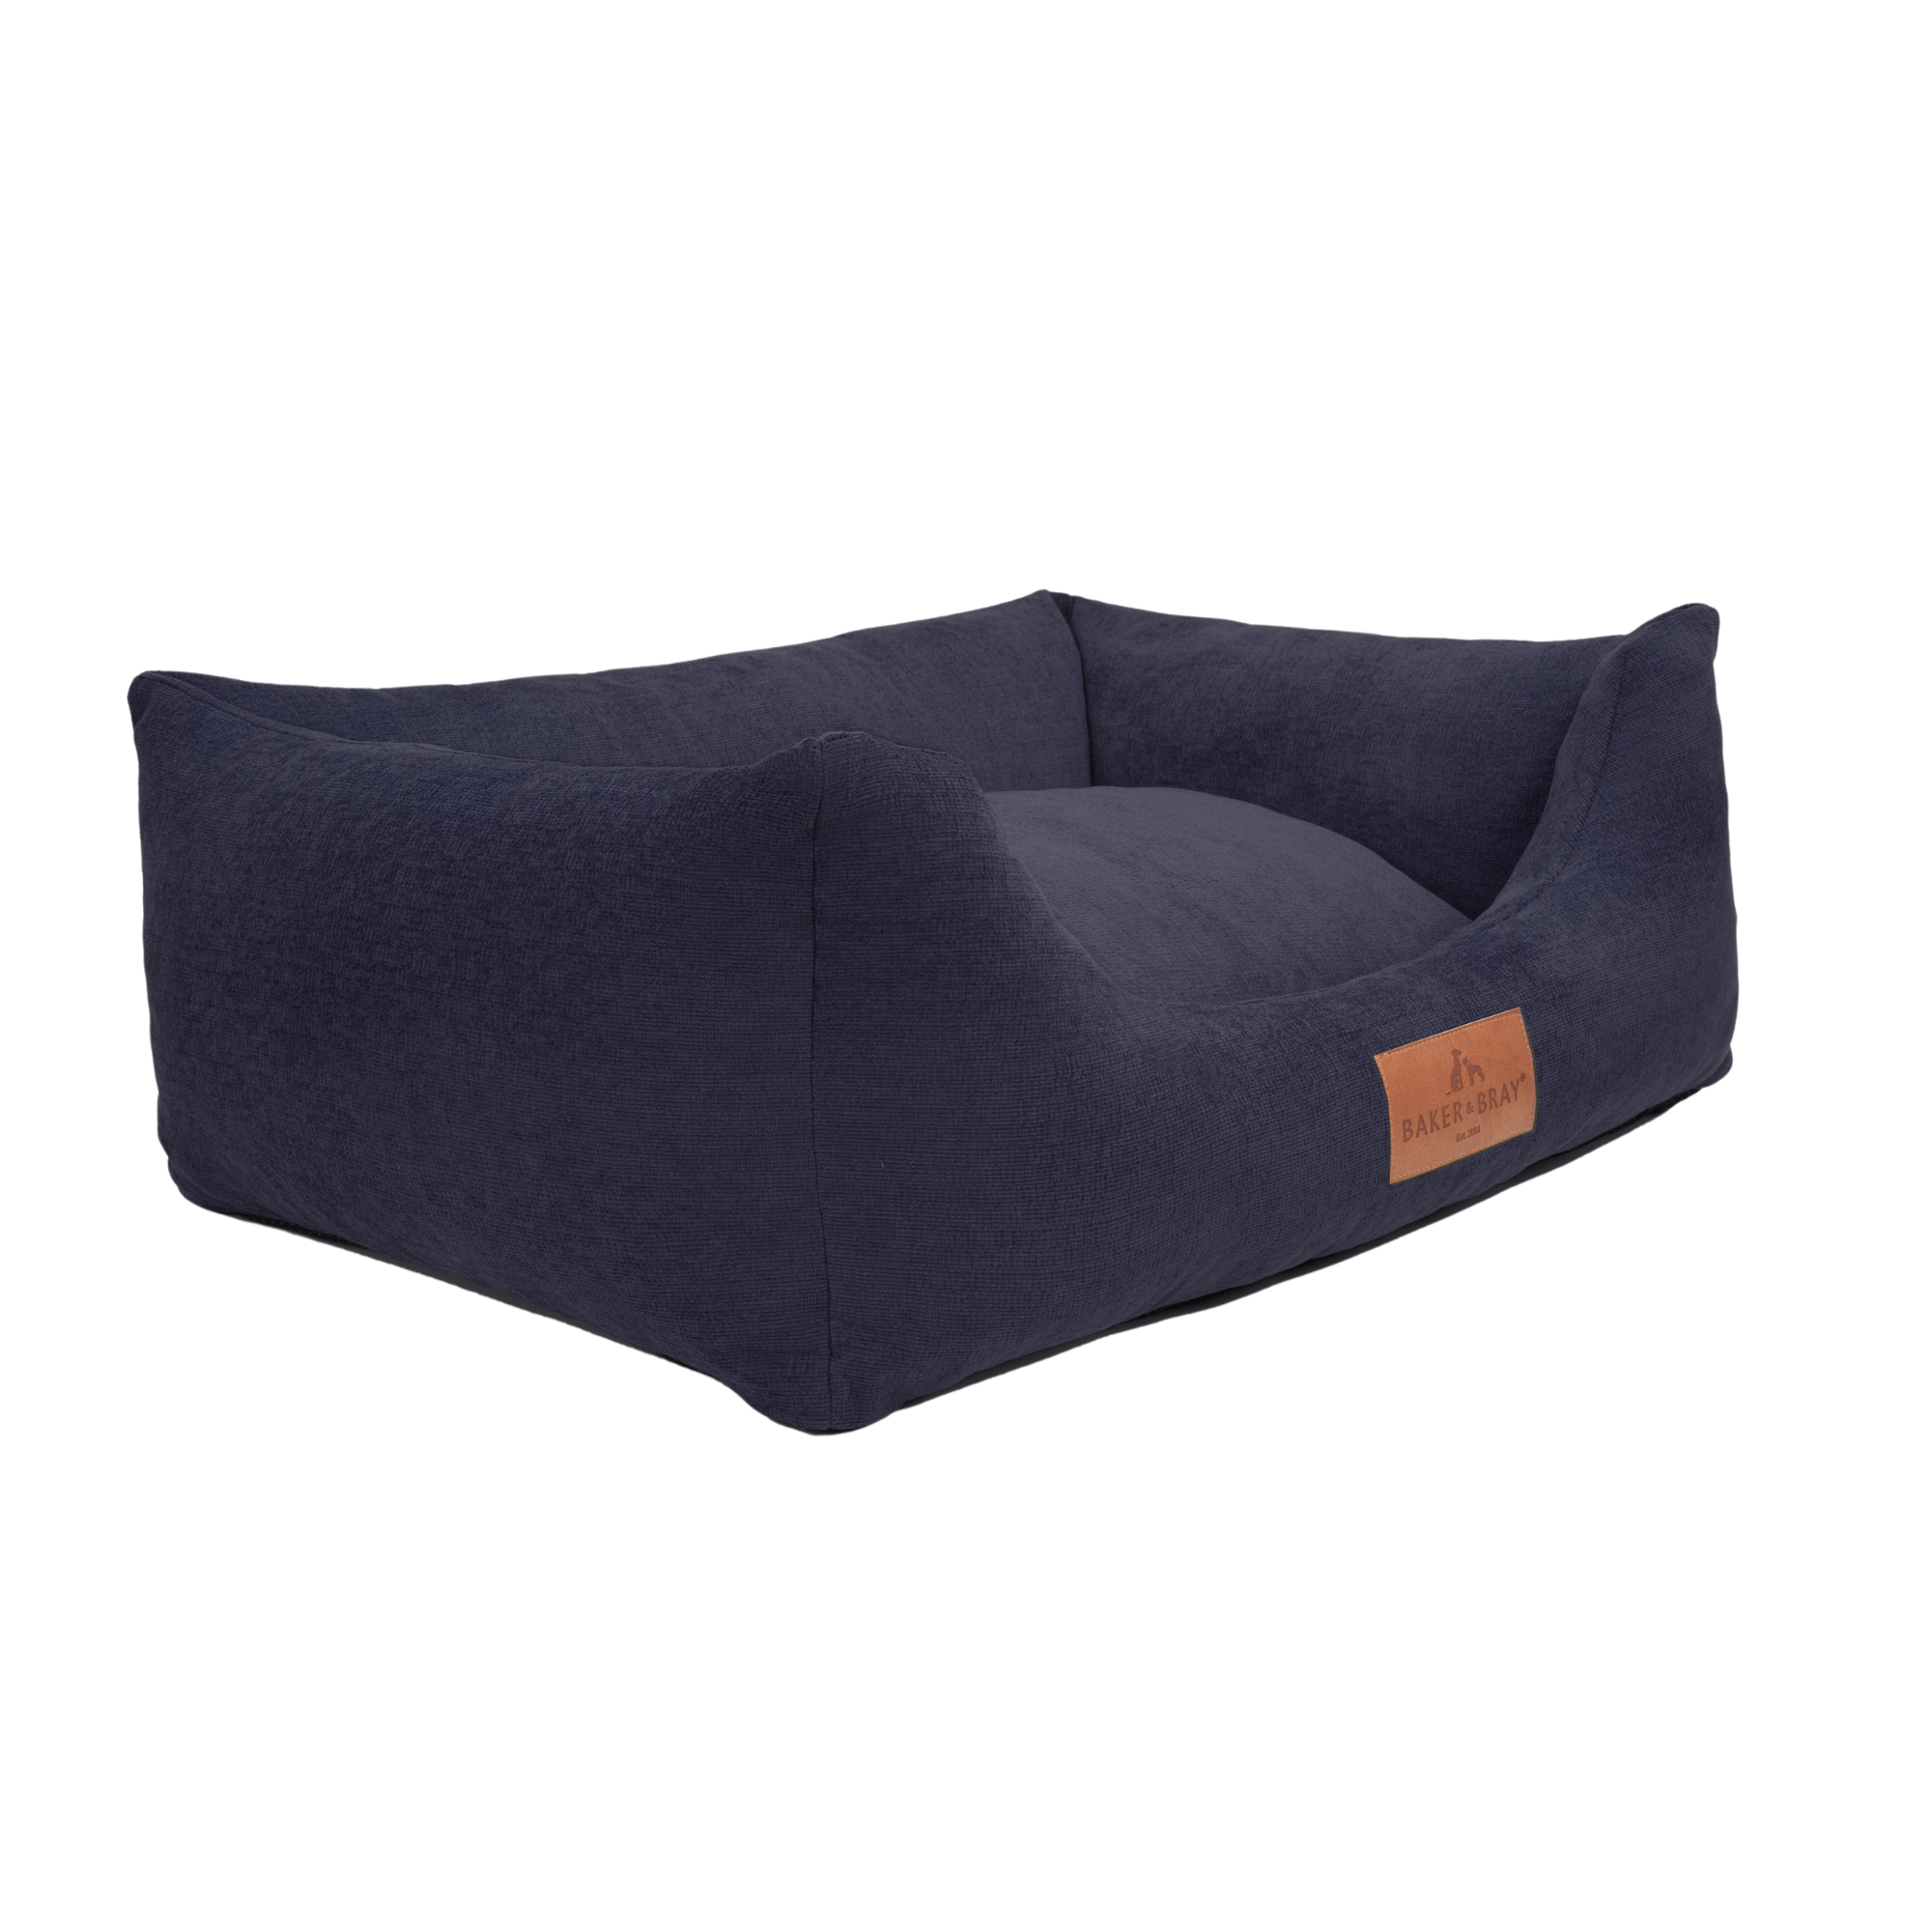 Eco Luxe Orthopaedic Luxury Dog Bed, Navy Blue